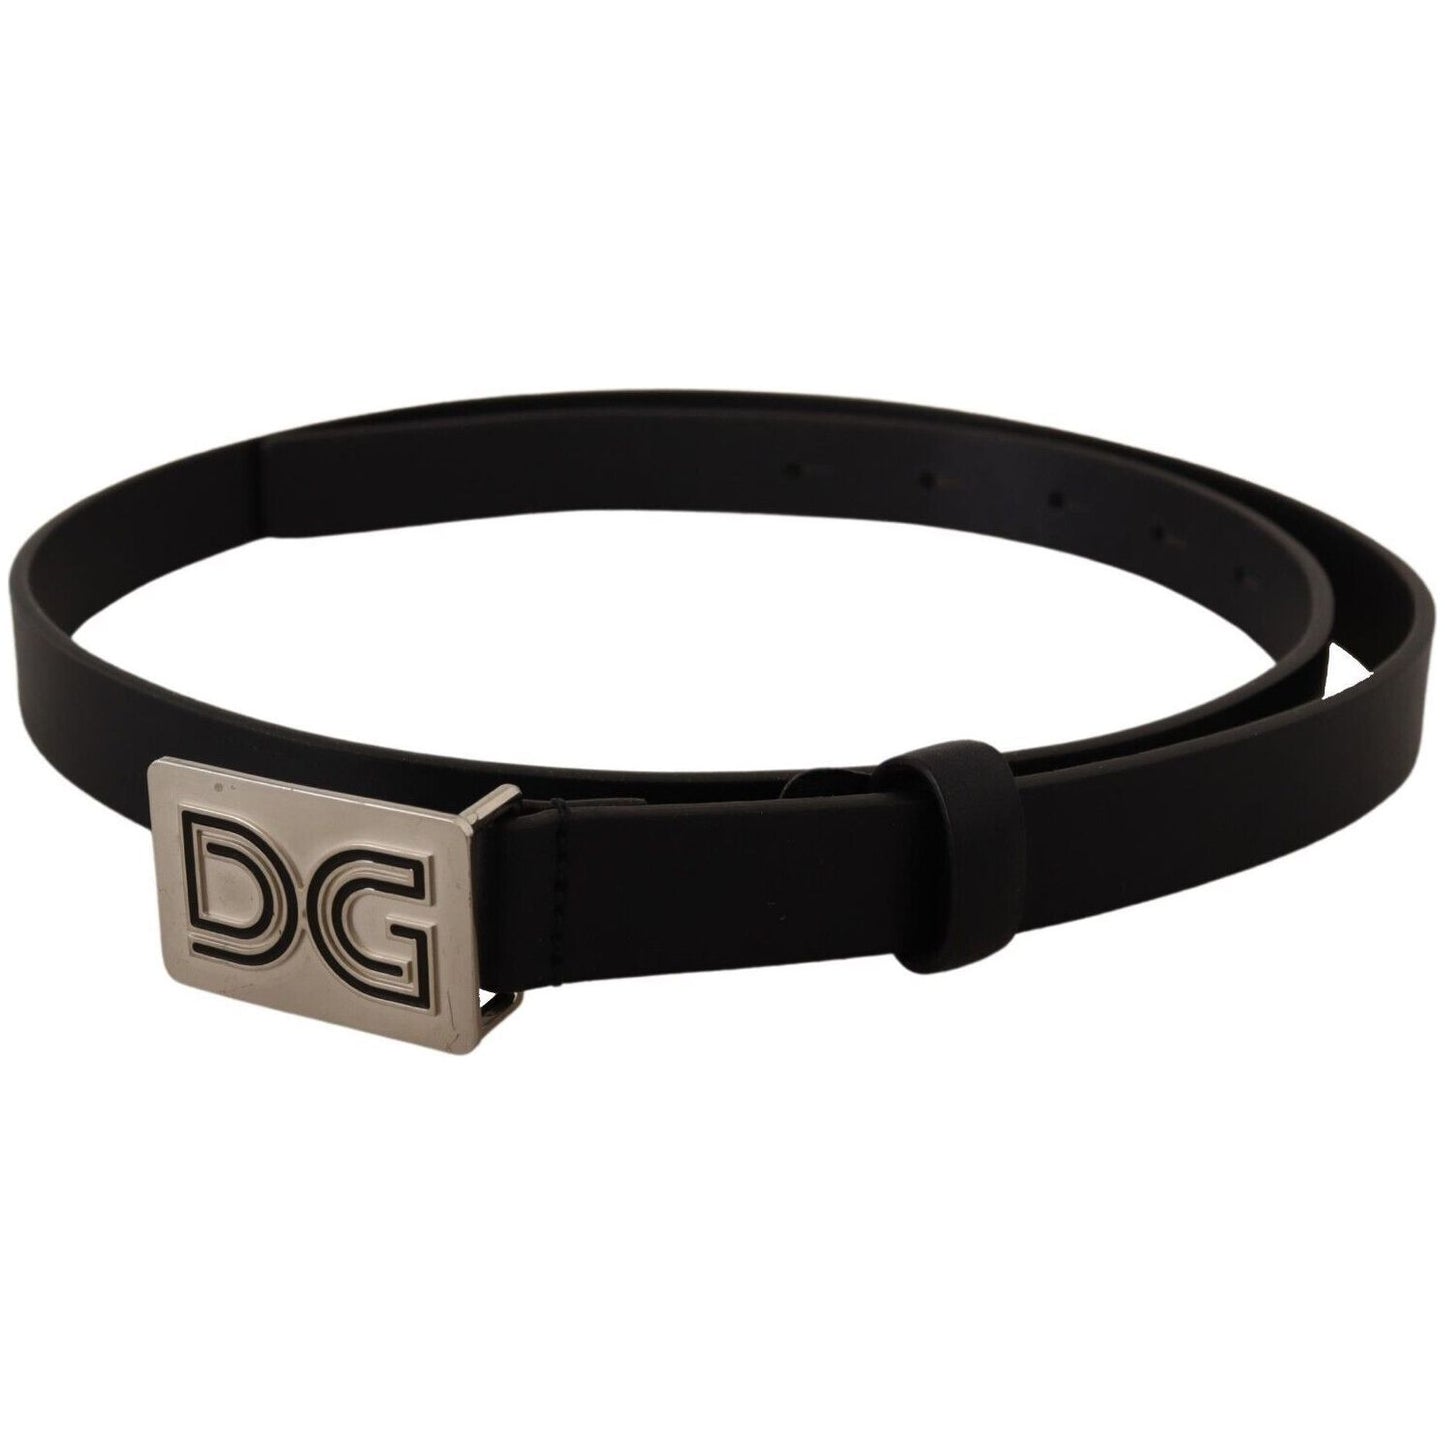 Dolce & Gabbana Elegant Black Leather Belt with Silver Buckle black-leather-silver-dg-logo-buckle-belt s-l1600-2-228-7b7b8364-4f3.jpg